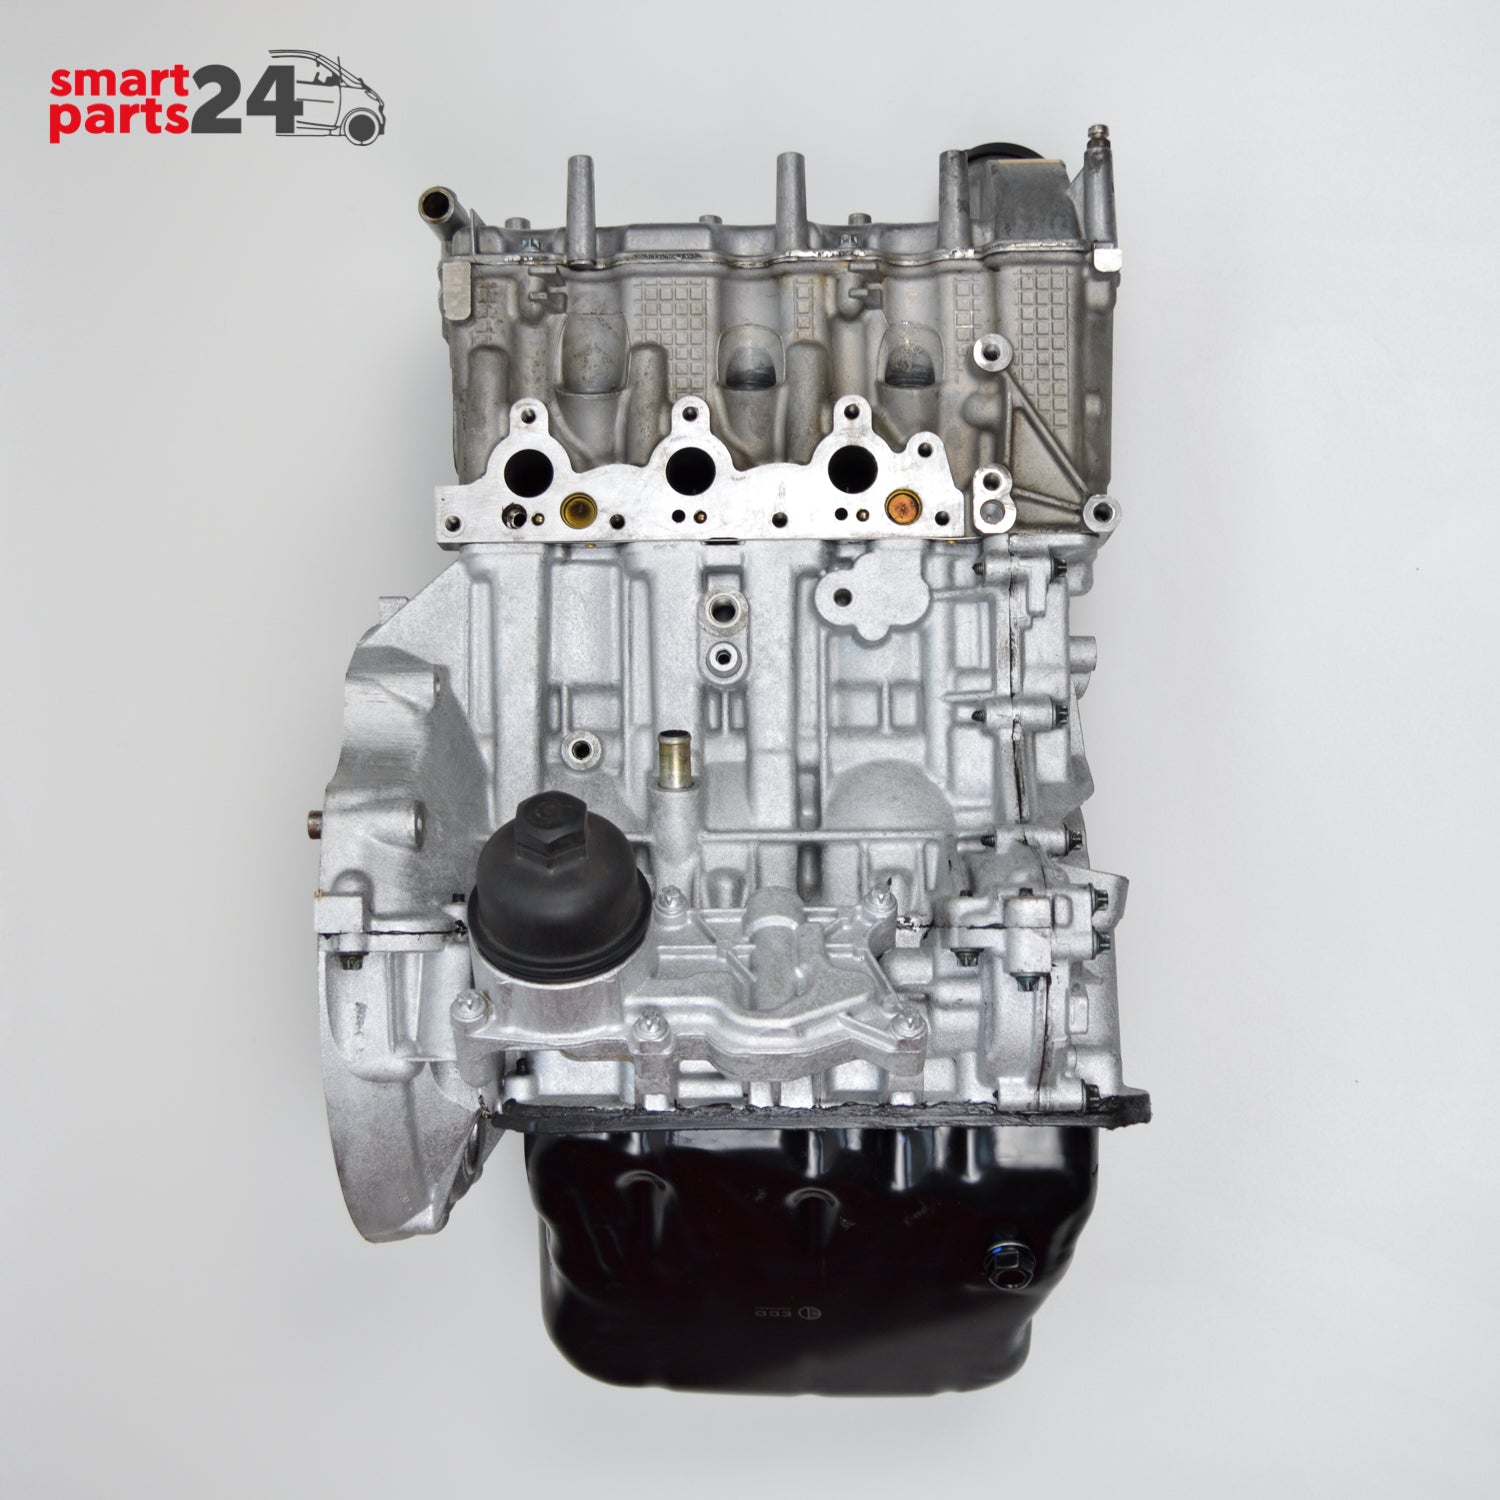 Smart Roadster 452 Rebuild Engine AT Motor 698cc 0.7 60kW A1600101500